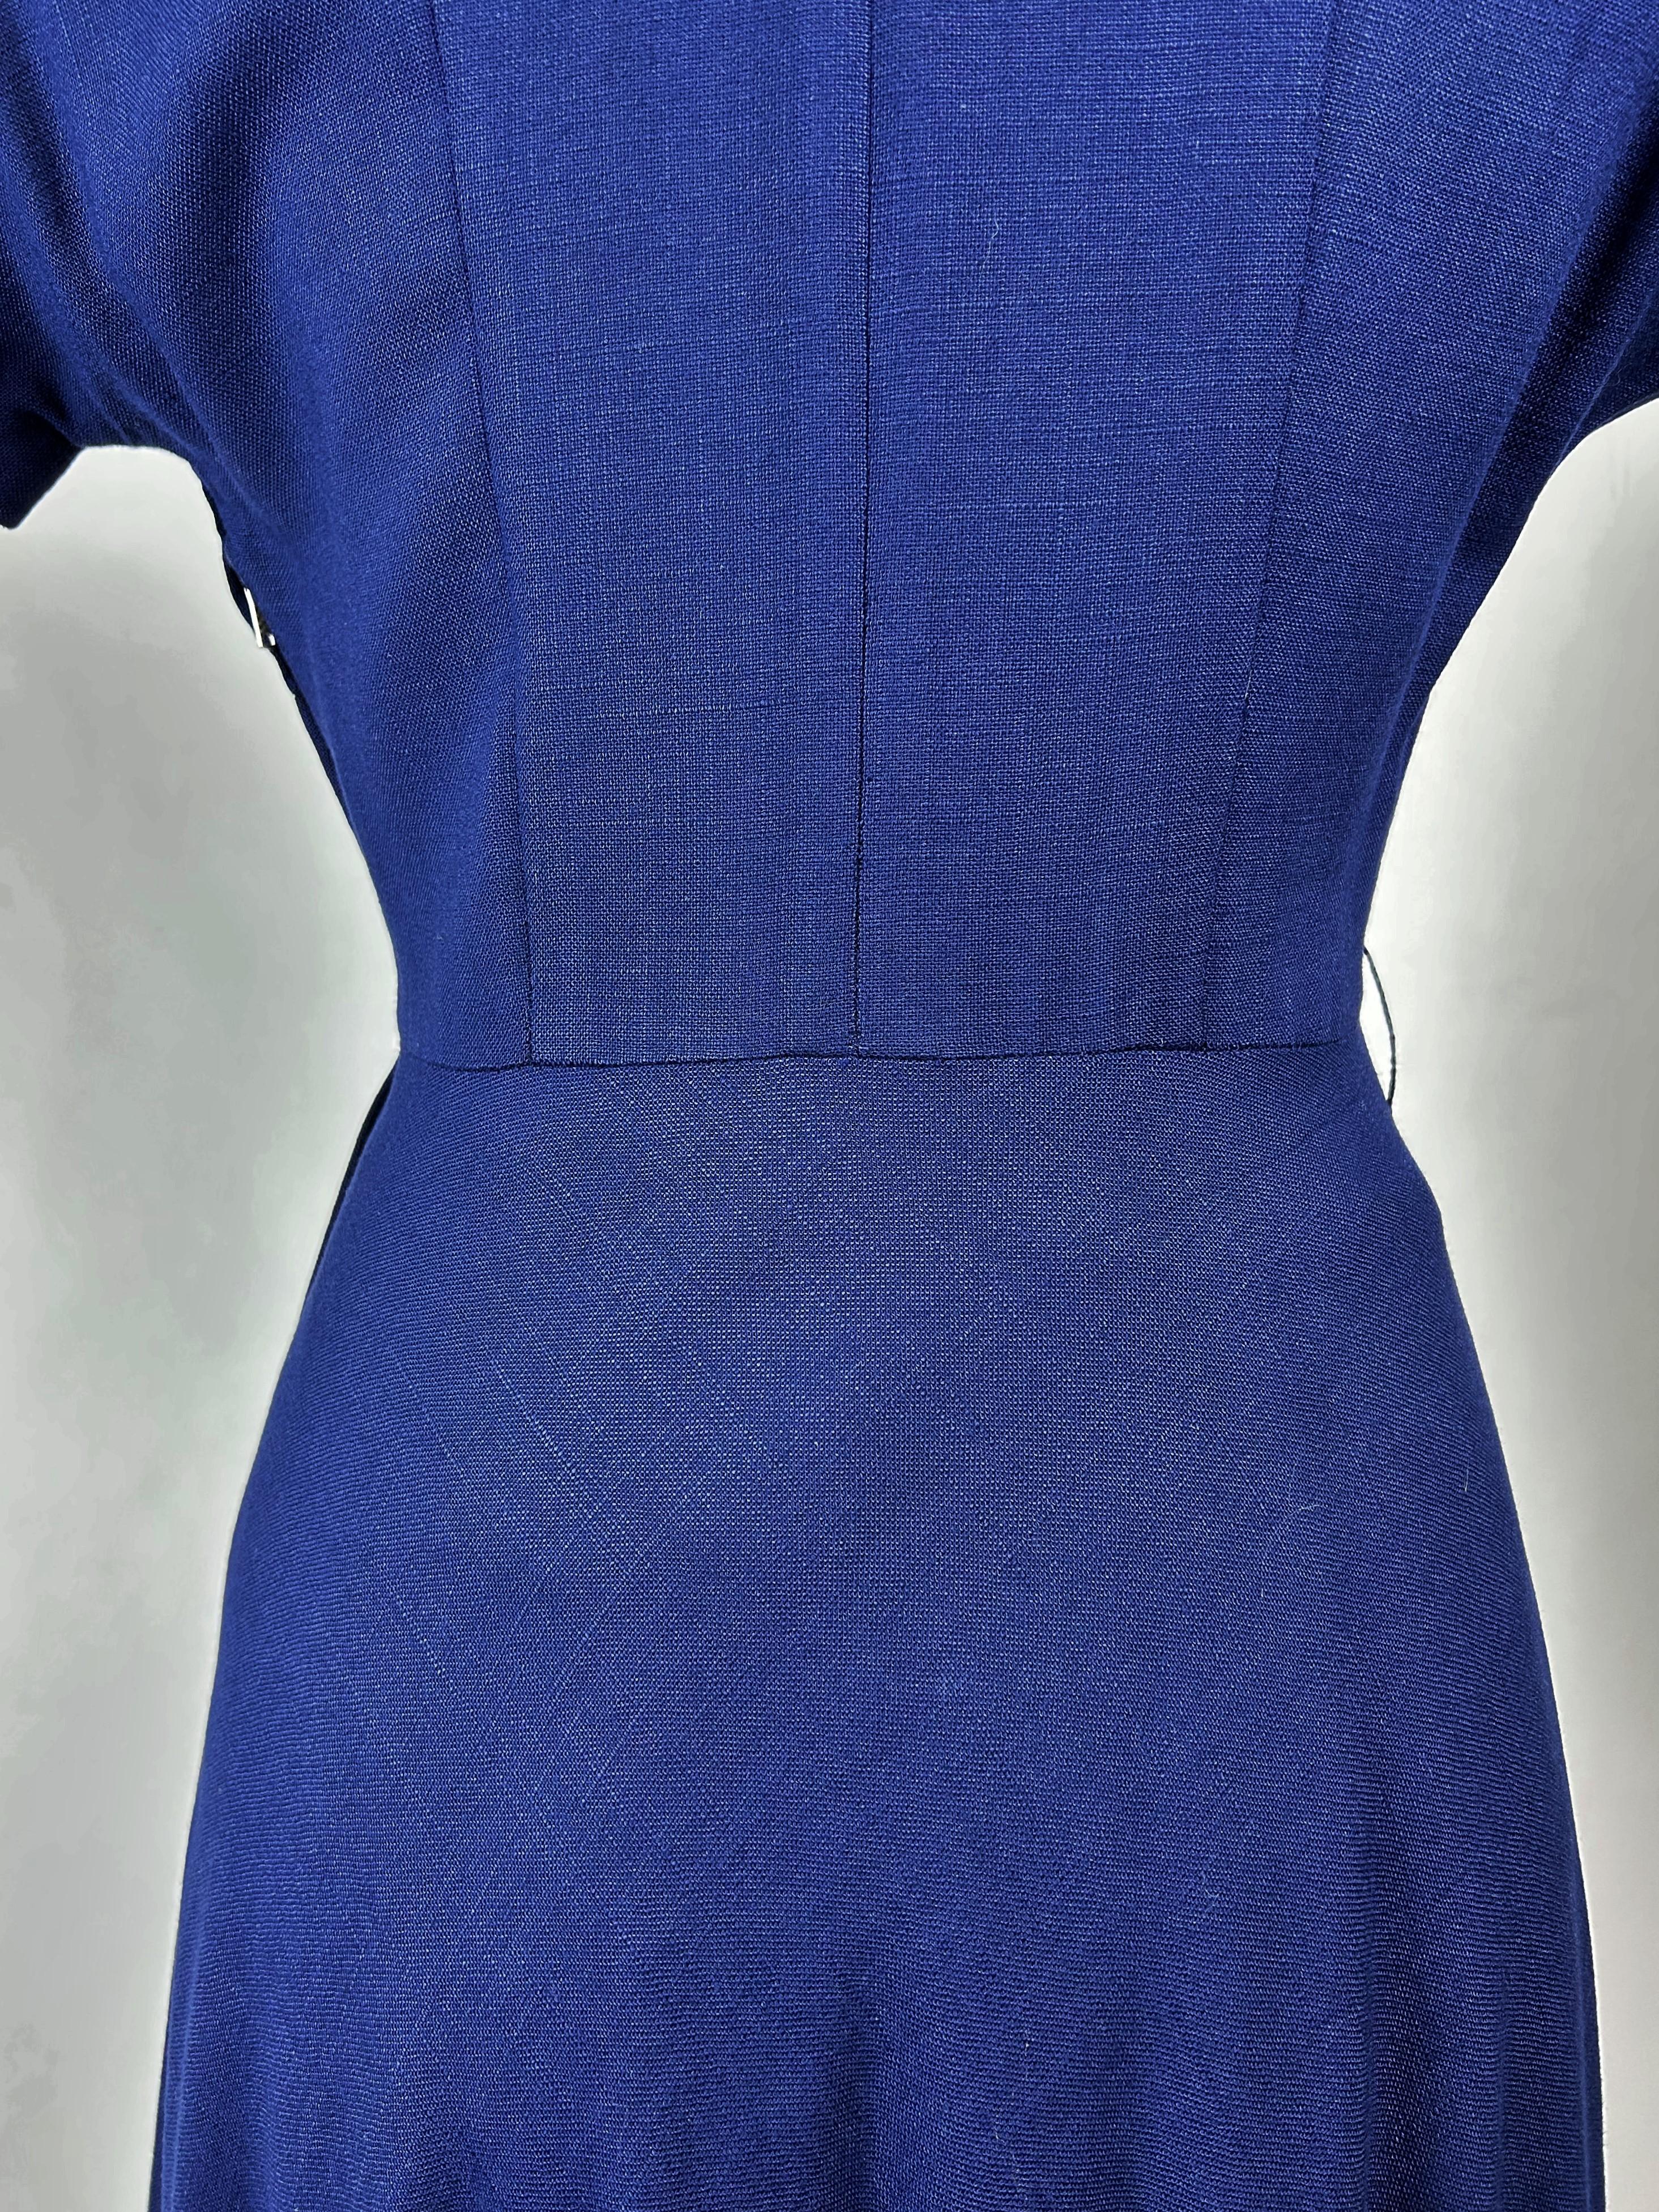 Robe de jour en tissu bleu marine avec applications de passepoils blancs Circa 1945-1950 en vente 10